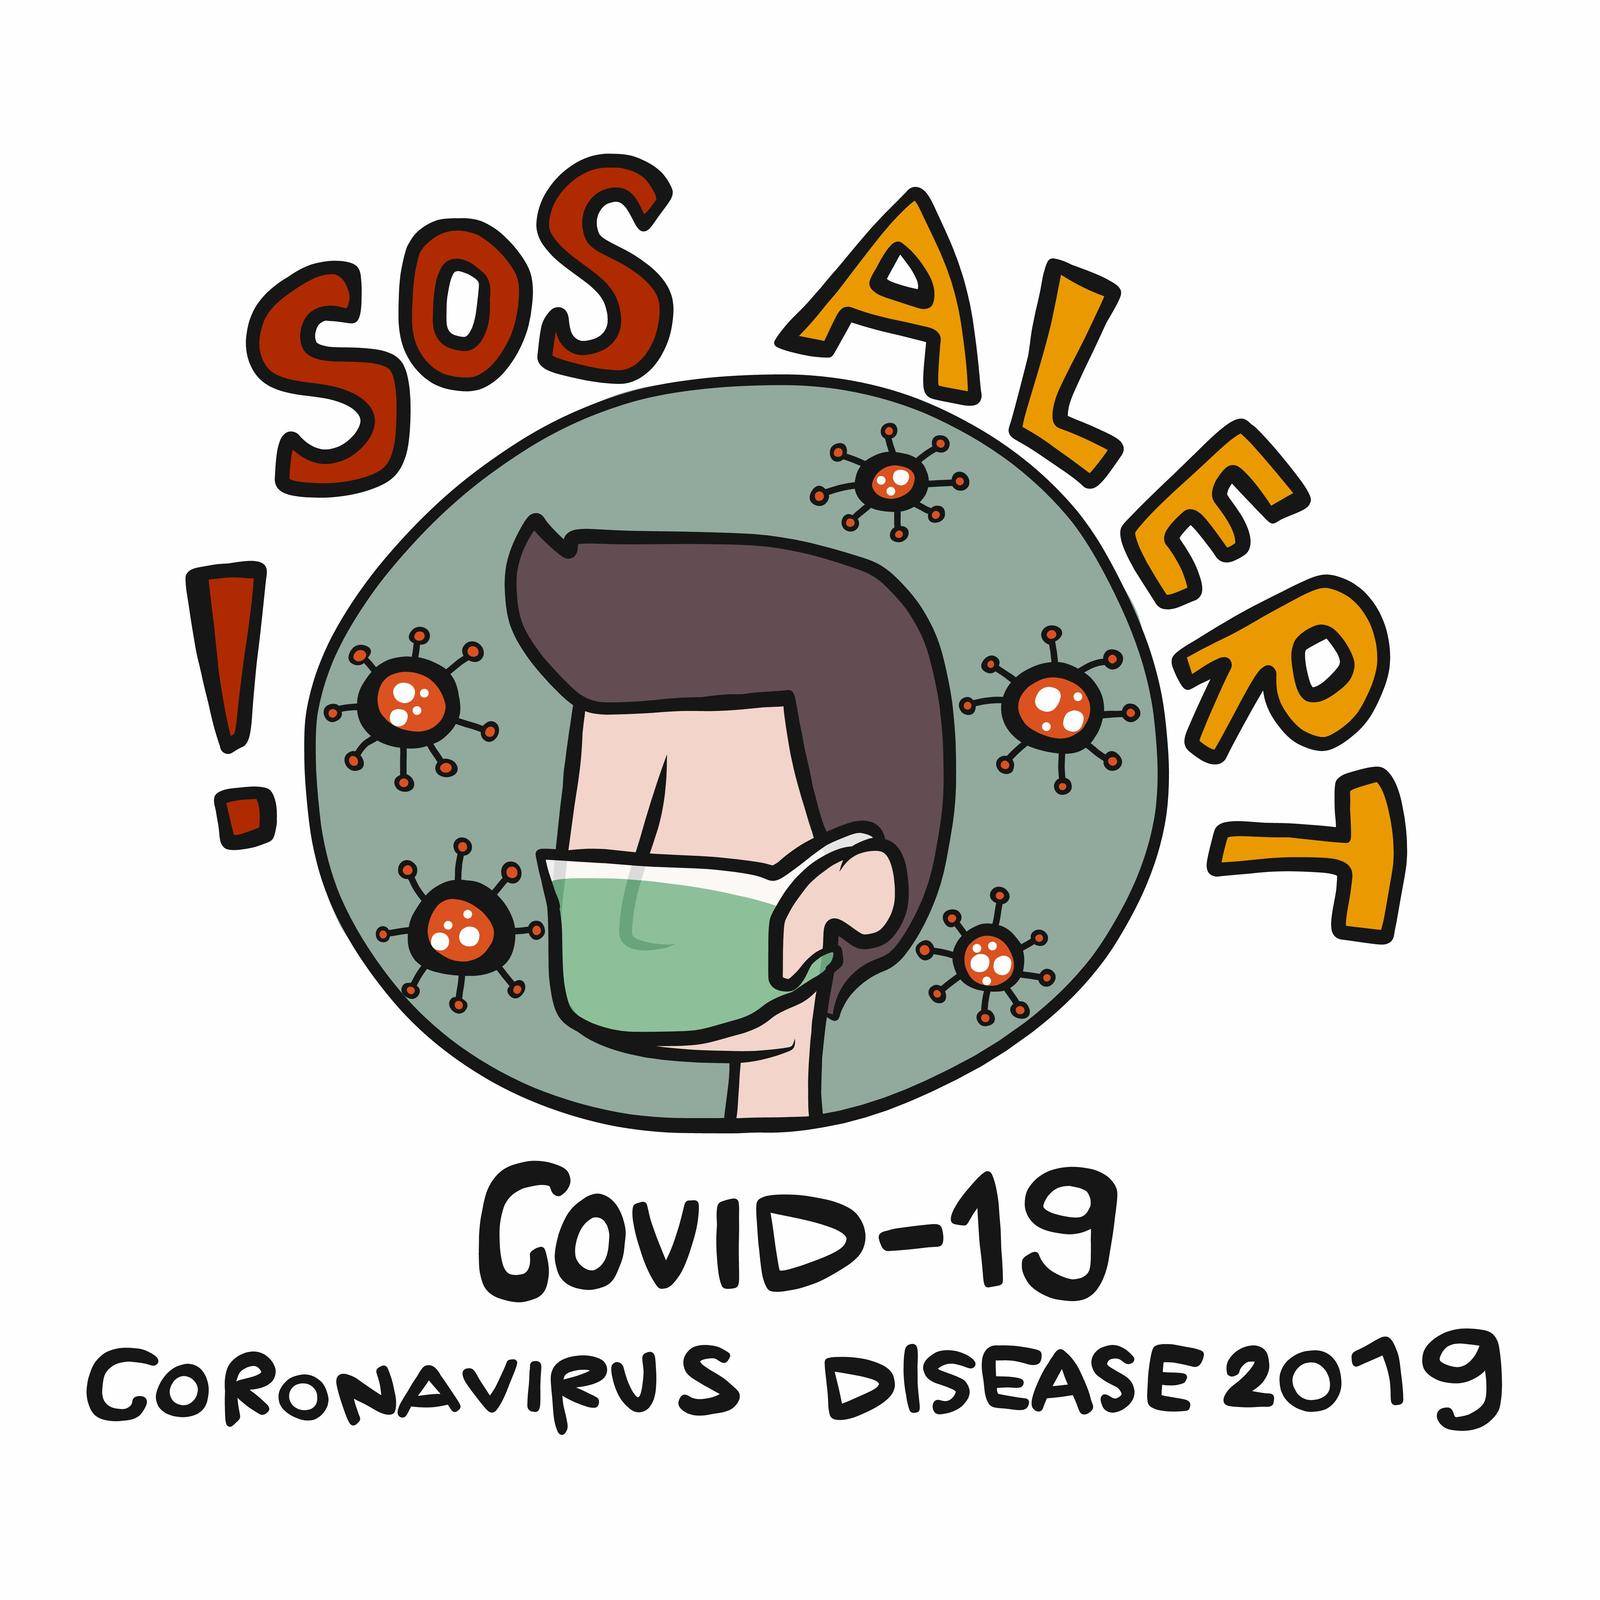 Covid-19 Coronavirus disease 2019 SOS alert with man wear hygienic mask logo cartoon vector illustration